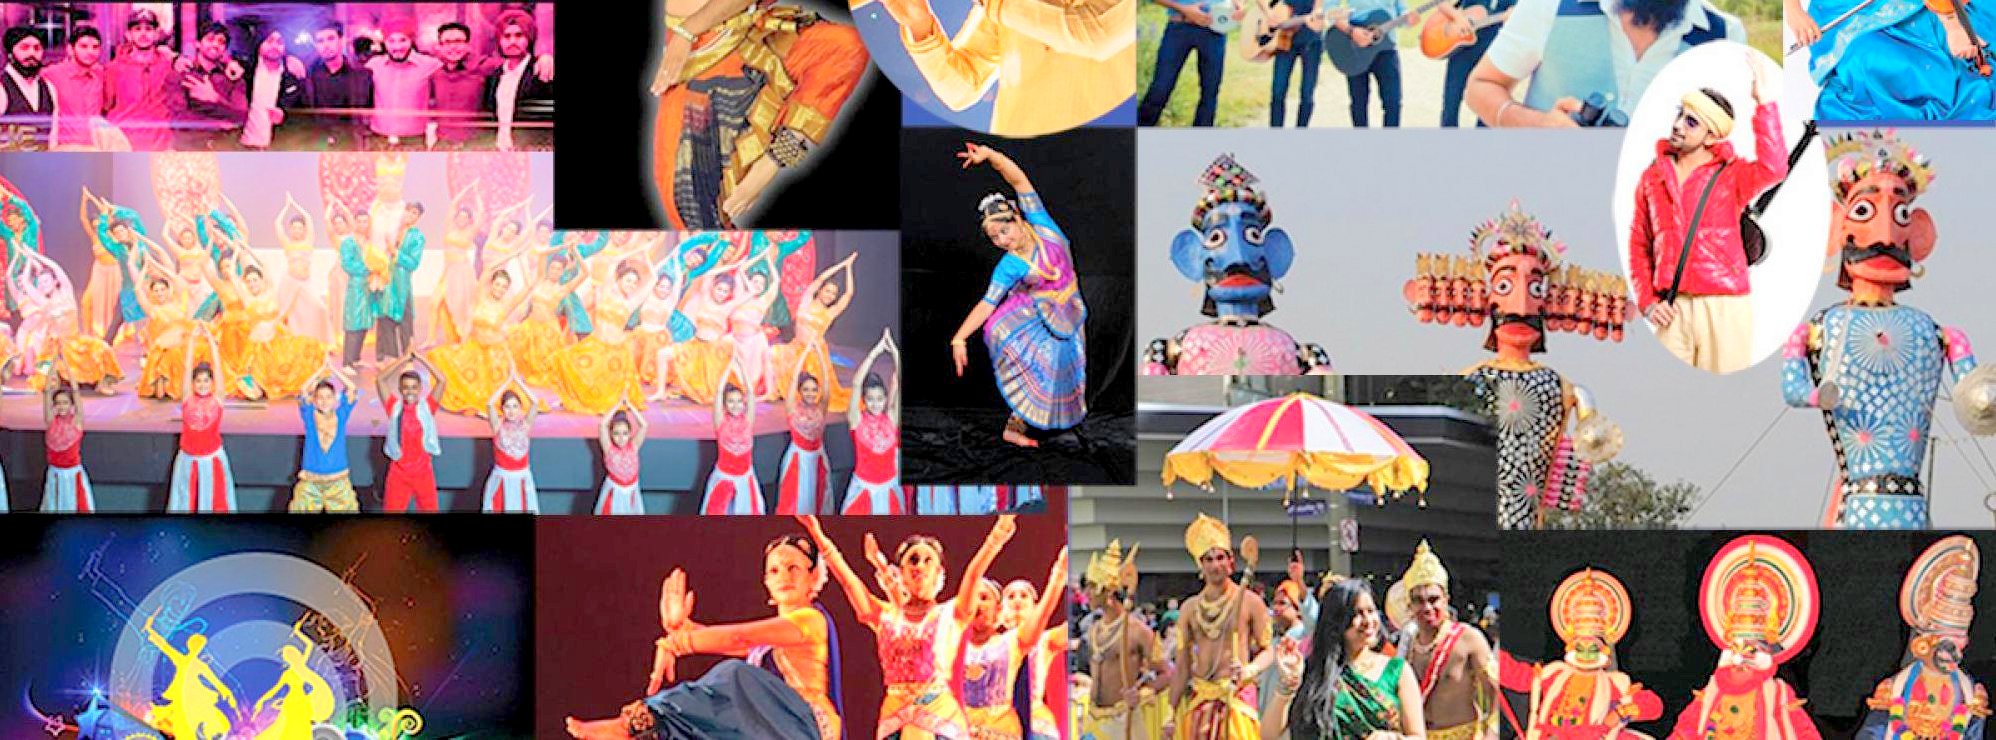 Diwali RazzMatazz Google image from https://culture.mississauga.ca/event/celebration-square/diwali-razzmatazz-1